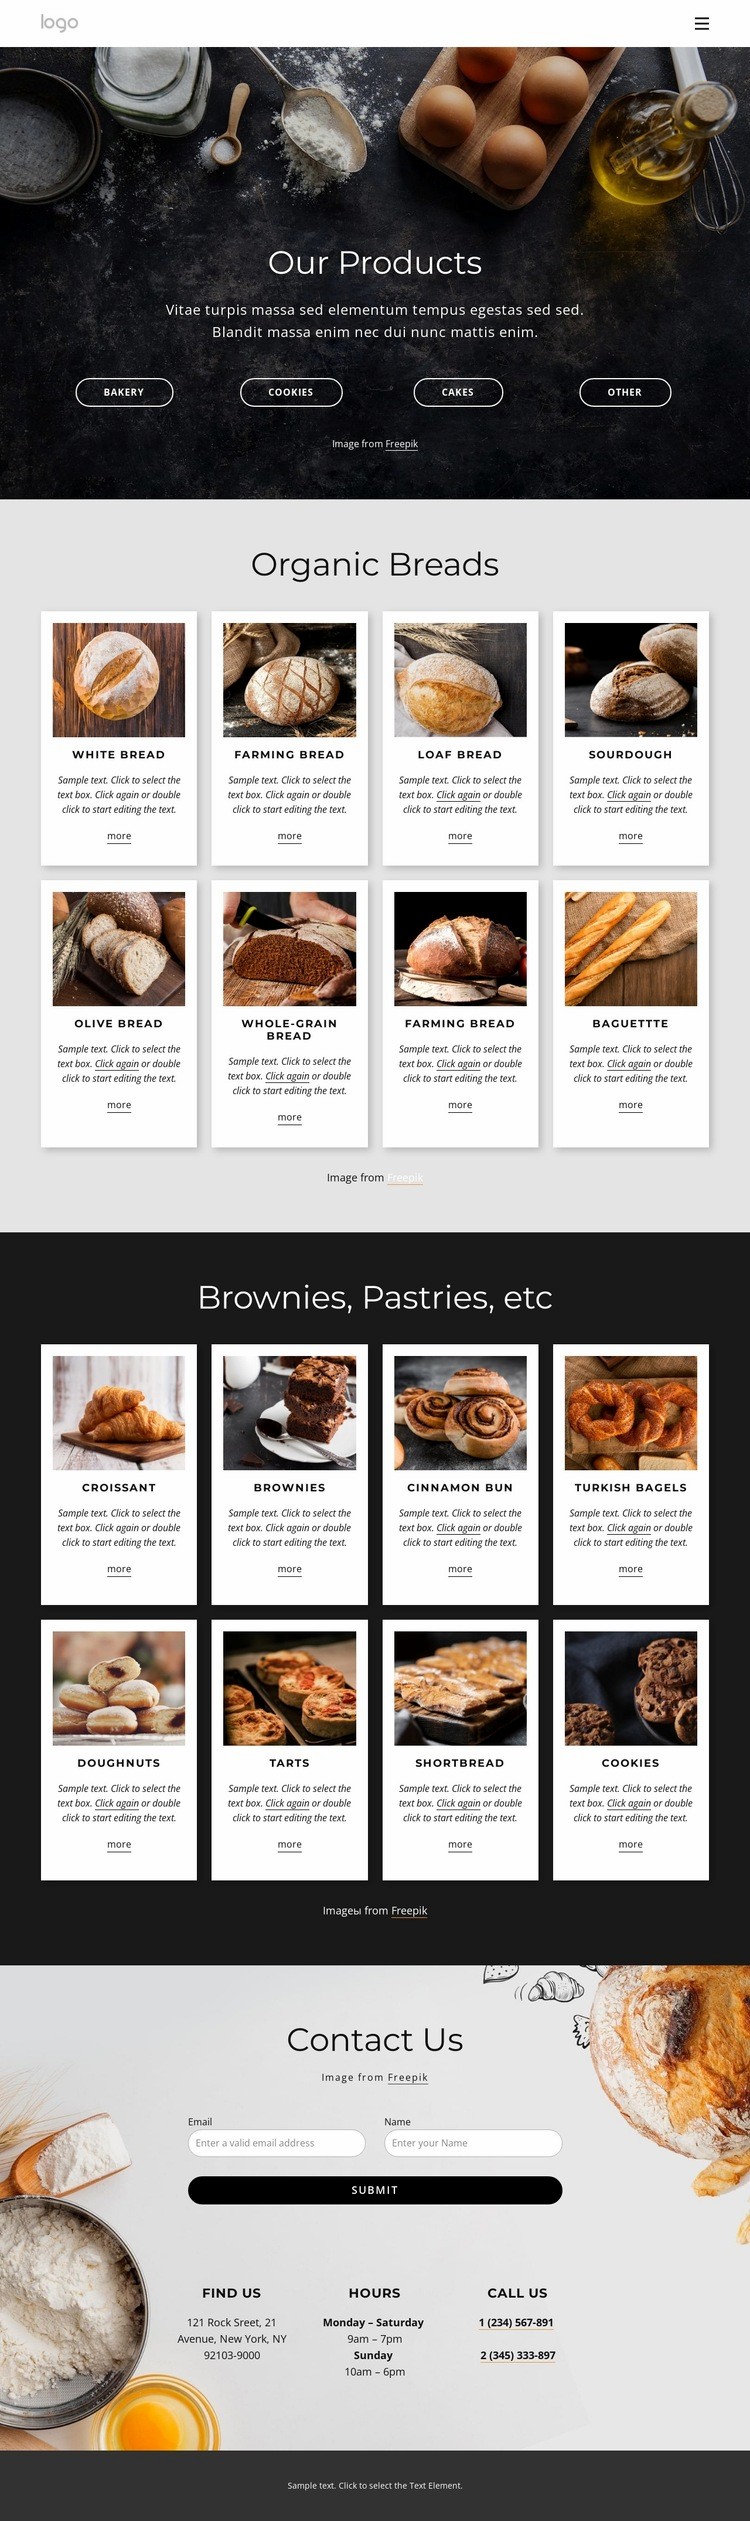 Organic bread menu Web Page Design